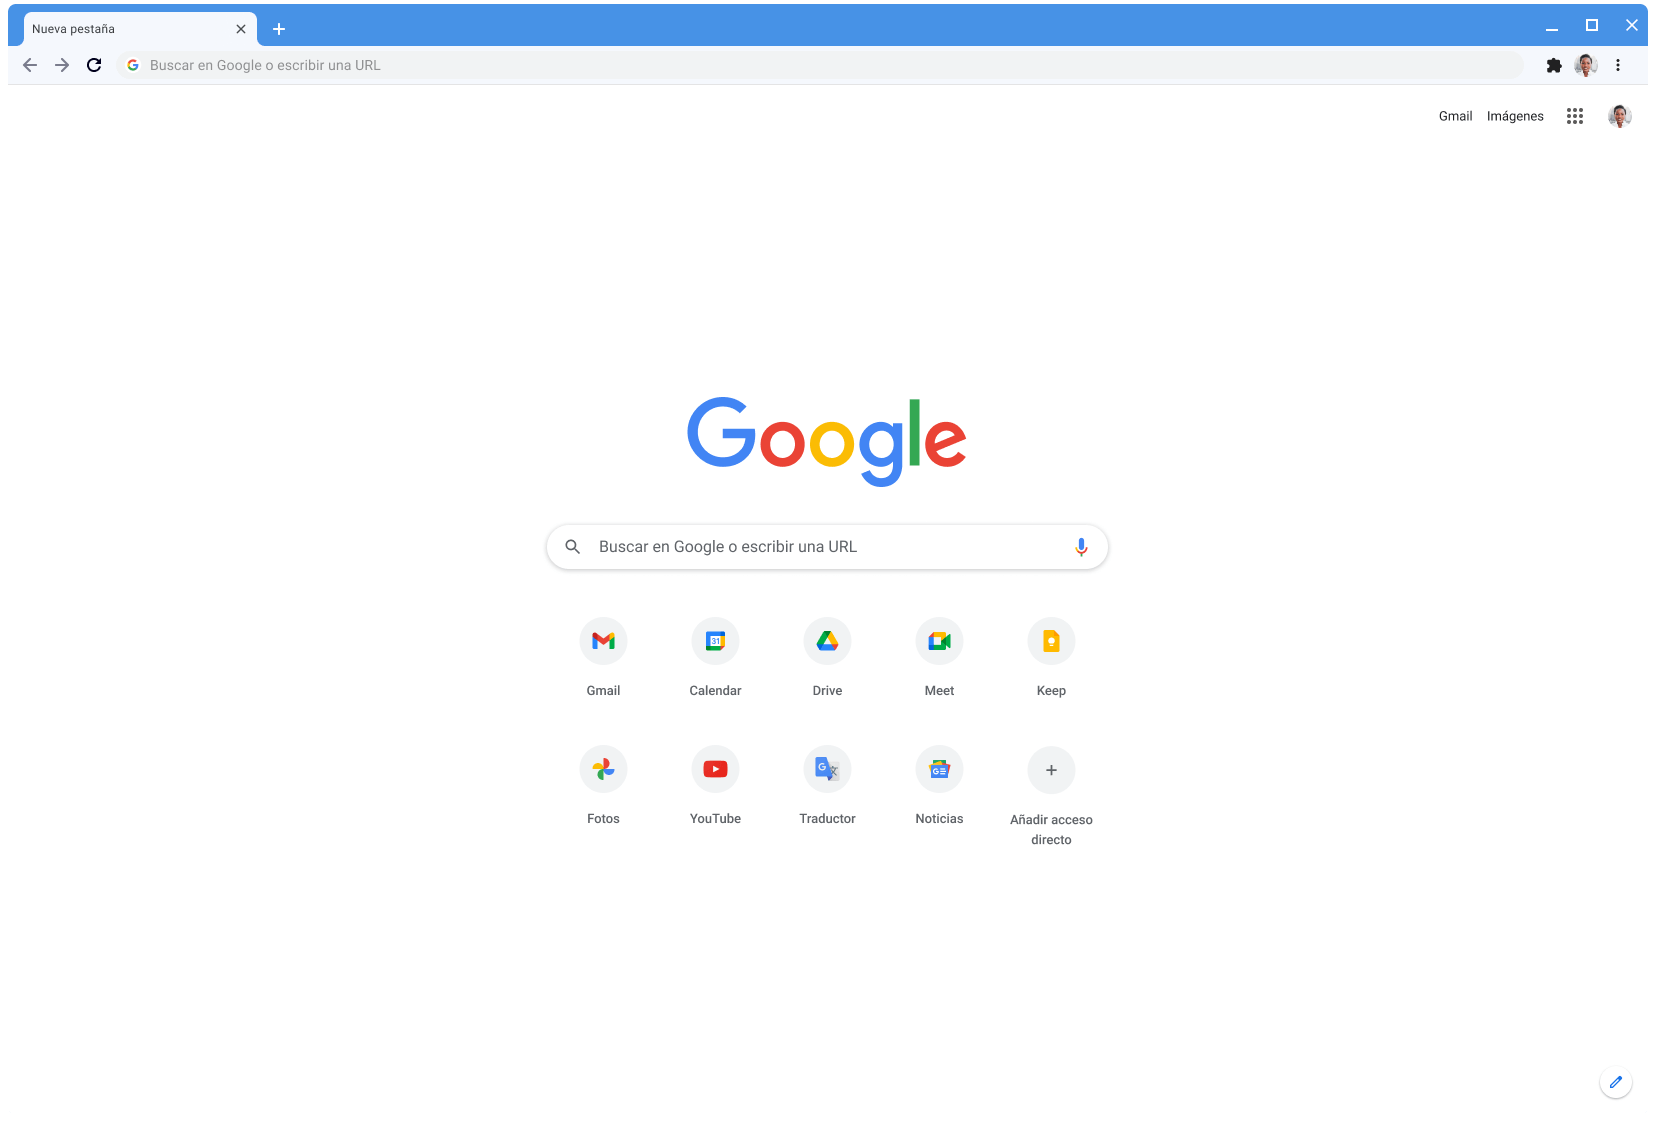 Ventana del navegador Chrome donde se muestra Google.com, con el tema clásico.